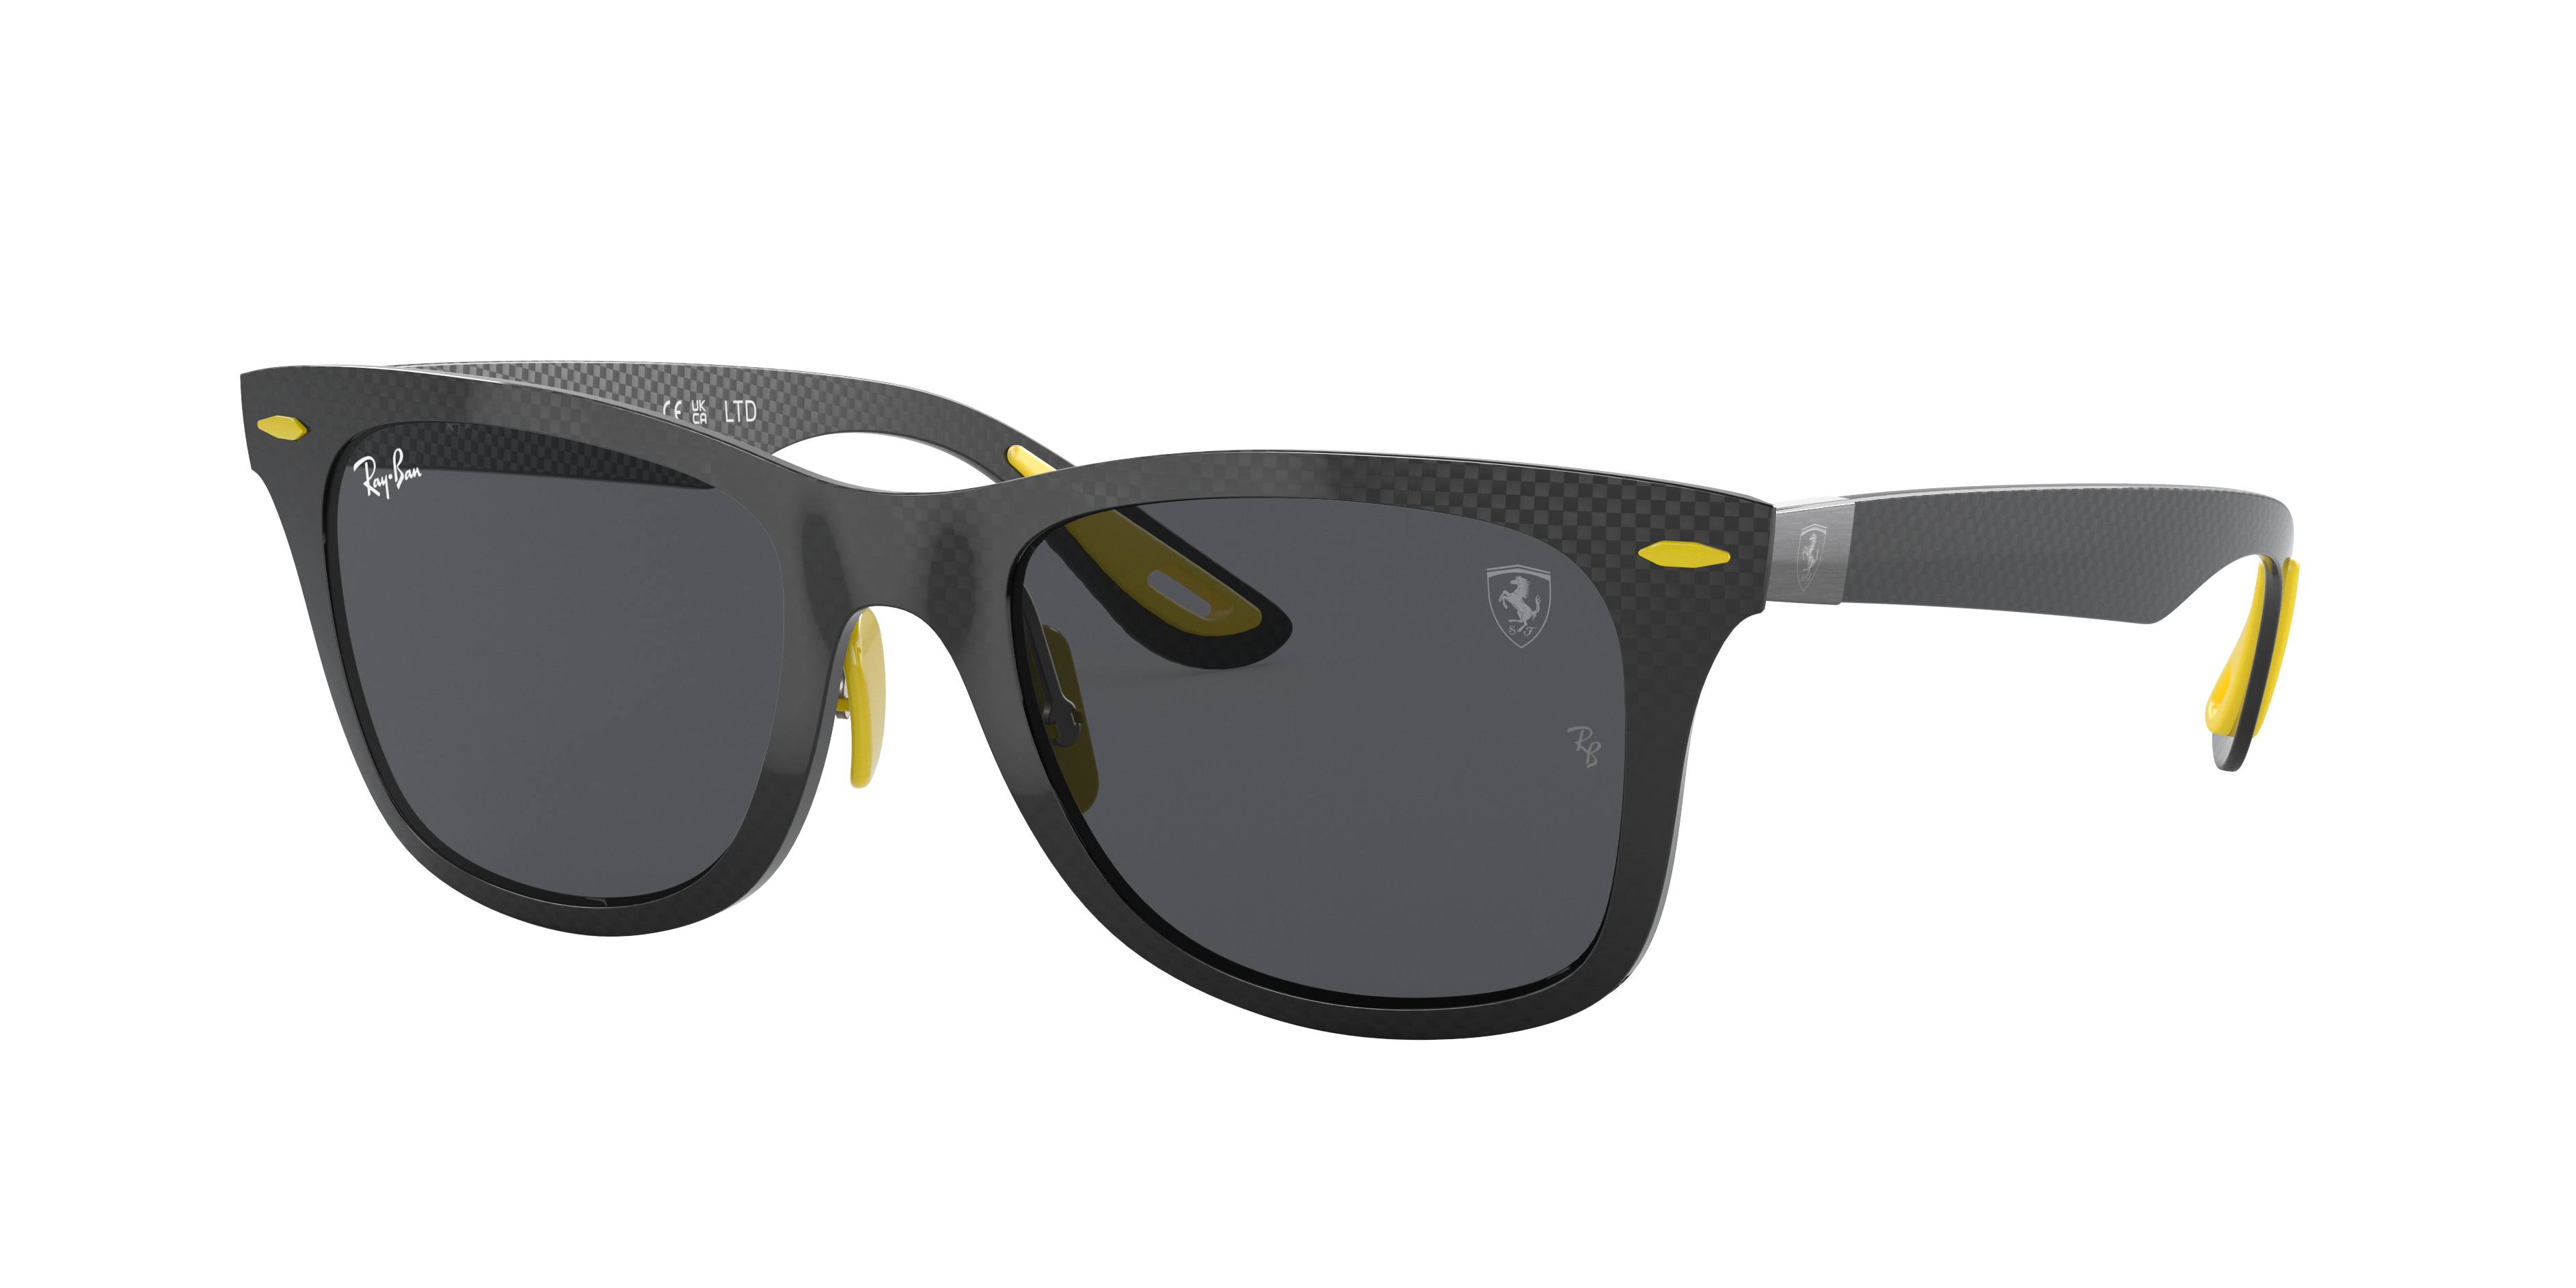 Wayfarer Carbon Fiber | Ferrari 75th Anniversary Edition Sunglasses in  Black and Dark Grey | Ray-Ban®